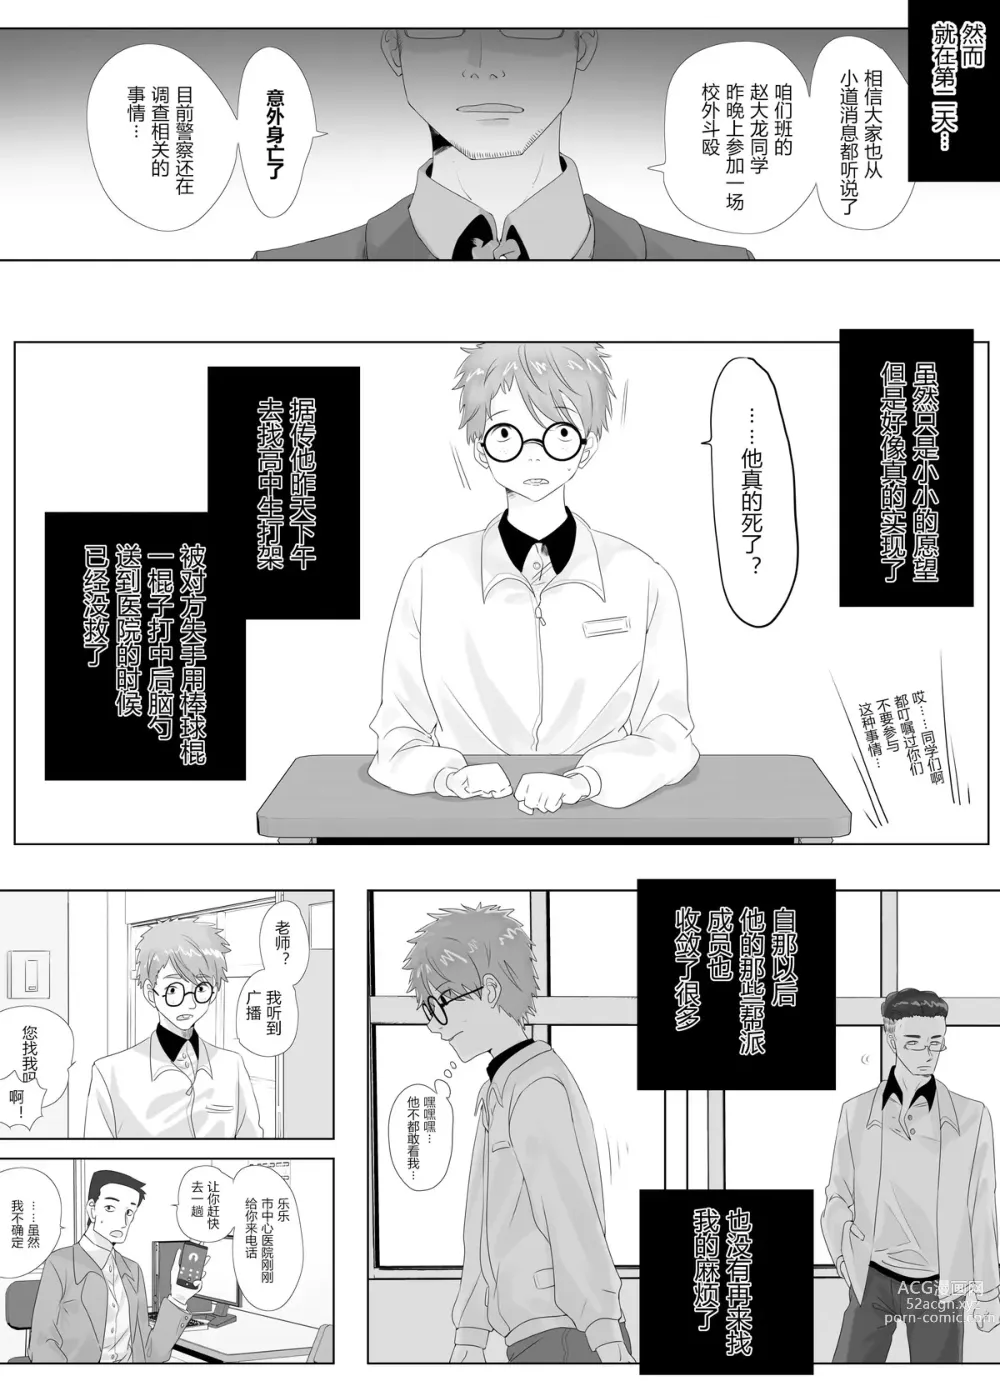 Page 8 of doujinshi 借身还魂